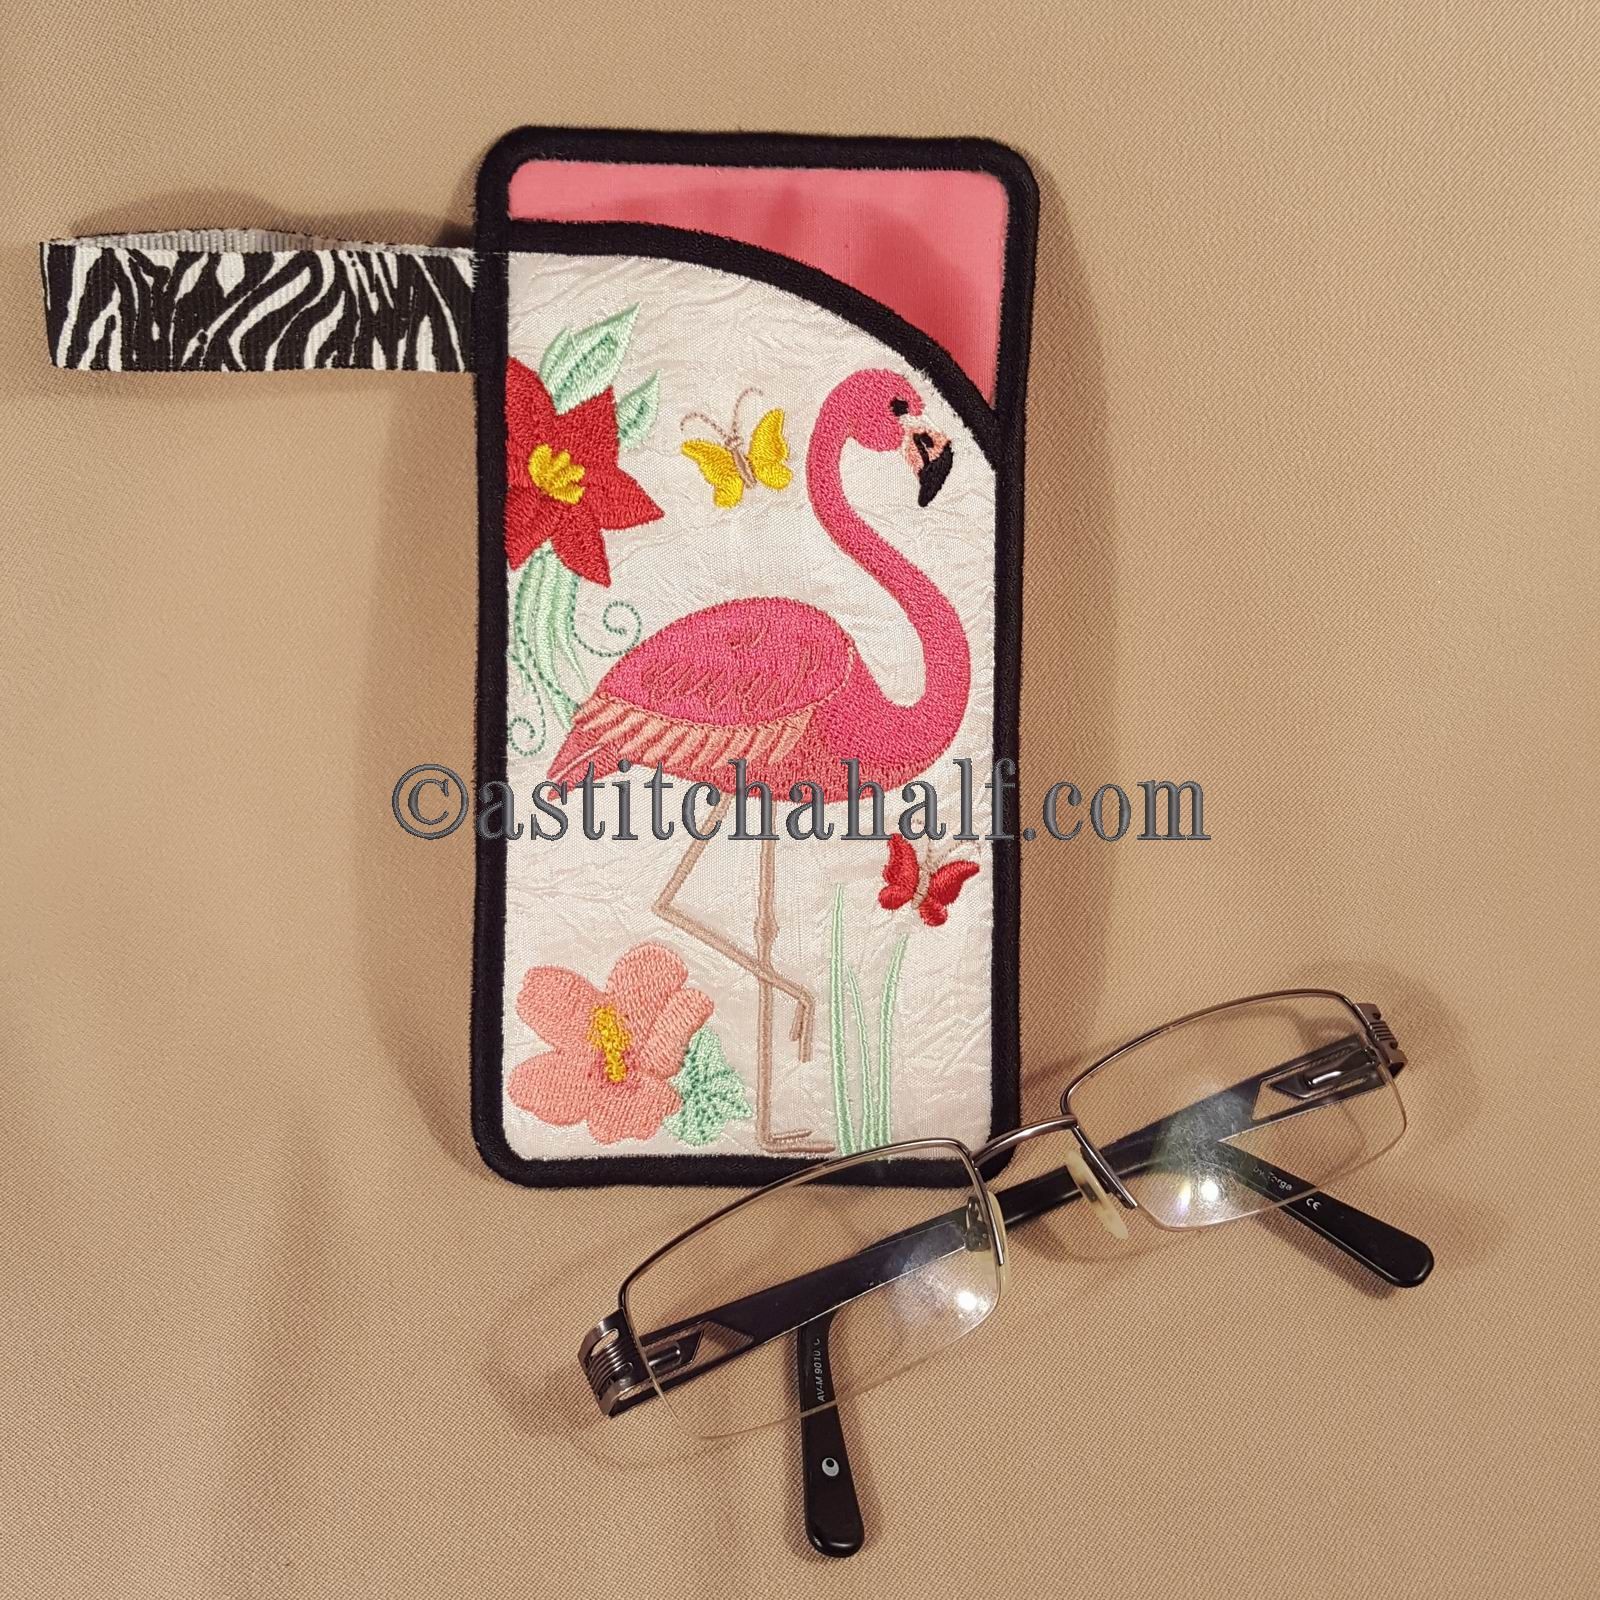 Flamingo Eyeglass Case - aStitch aHalf